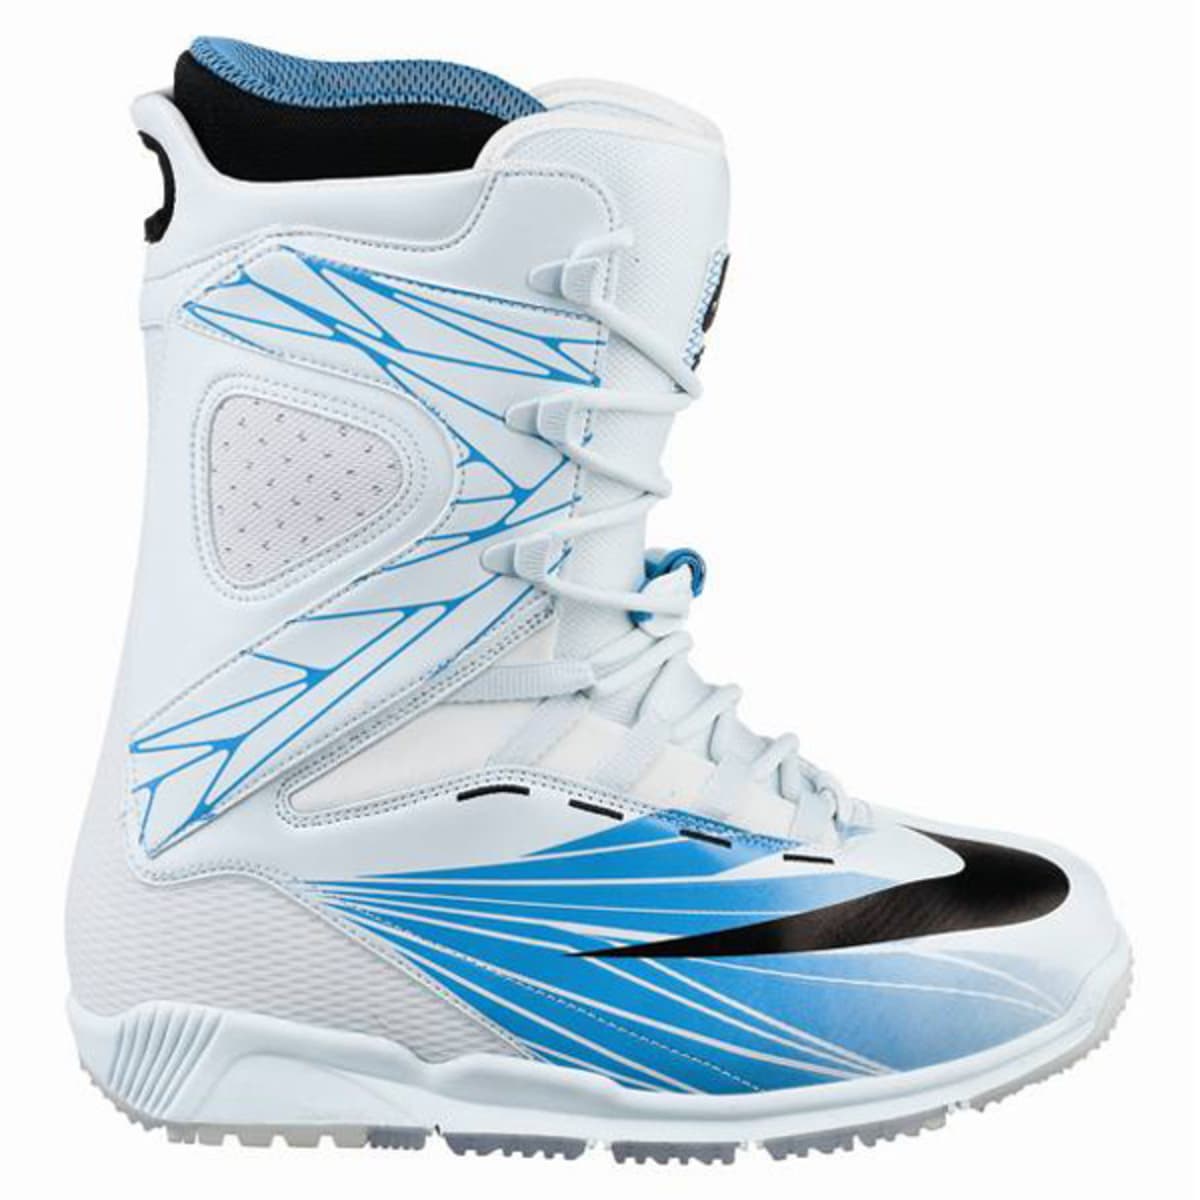 Gigi Ruf Nike Boot Release - Snowboarder